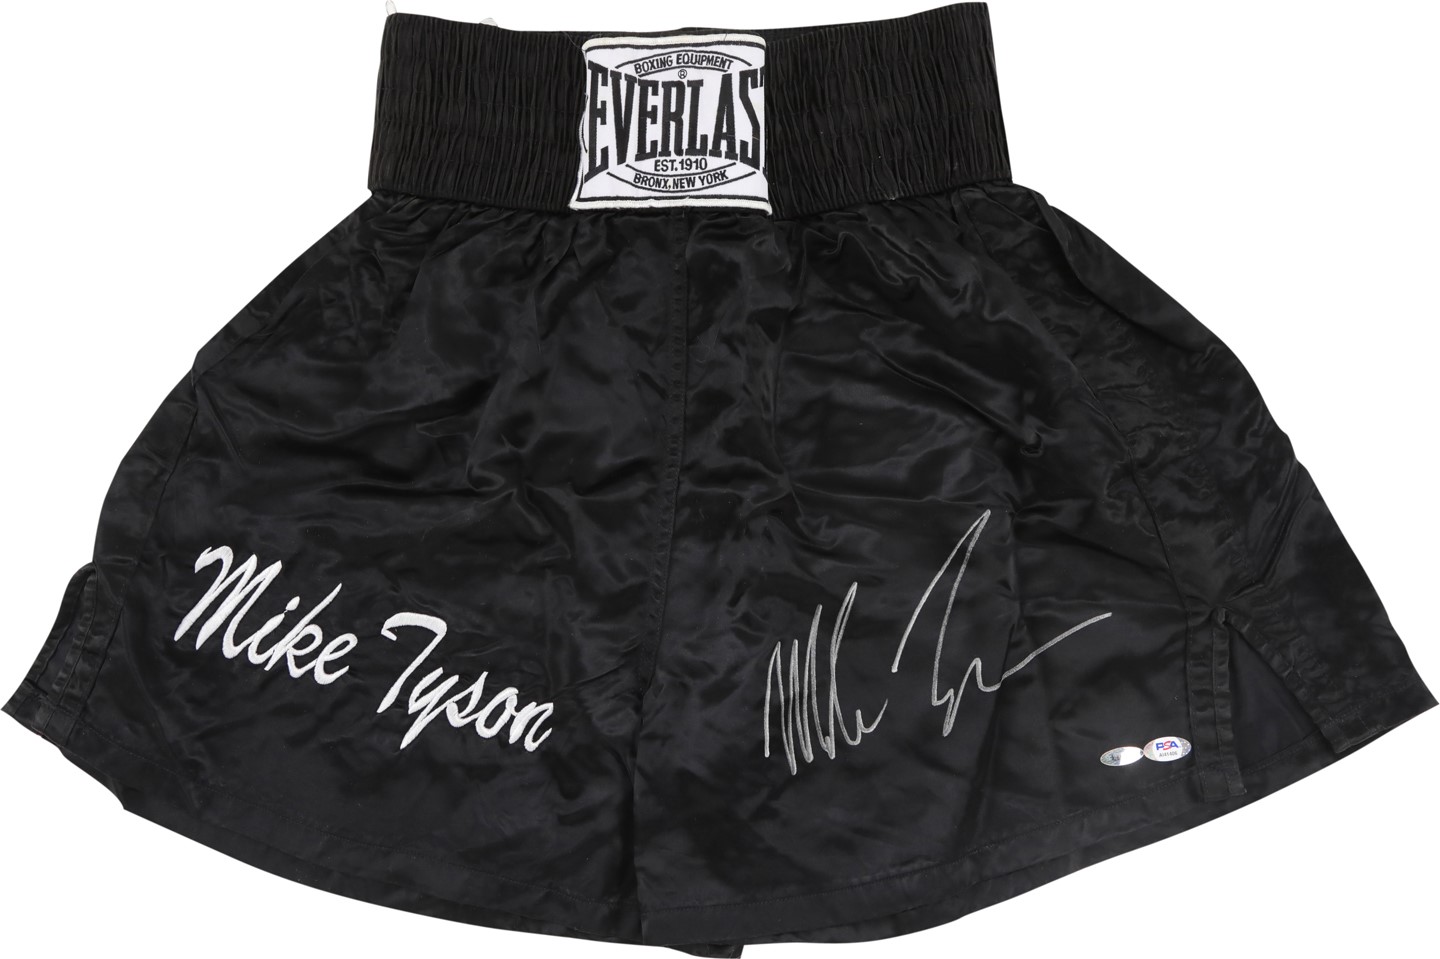 - Mike Tyson Signed Boxing Trunks (PSA)